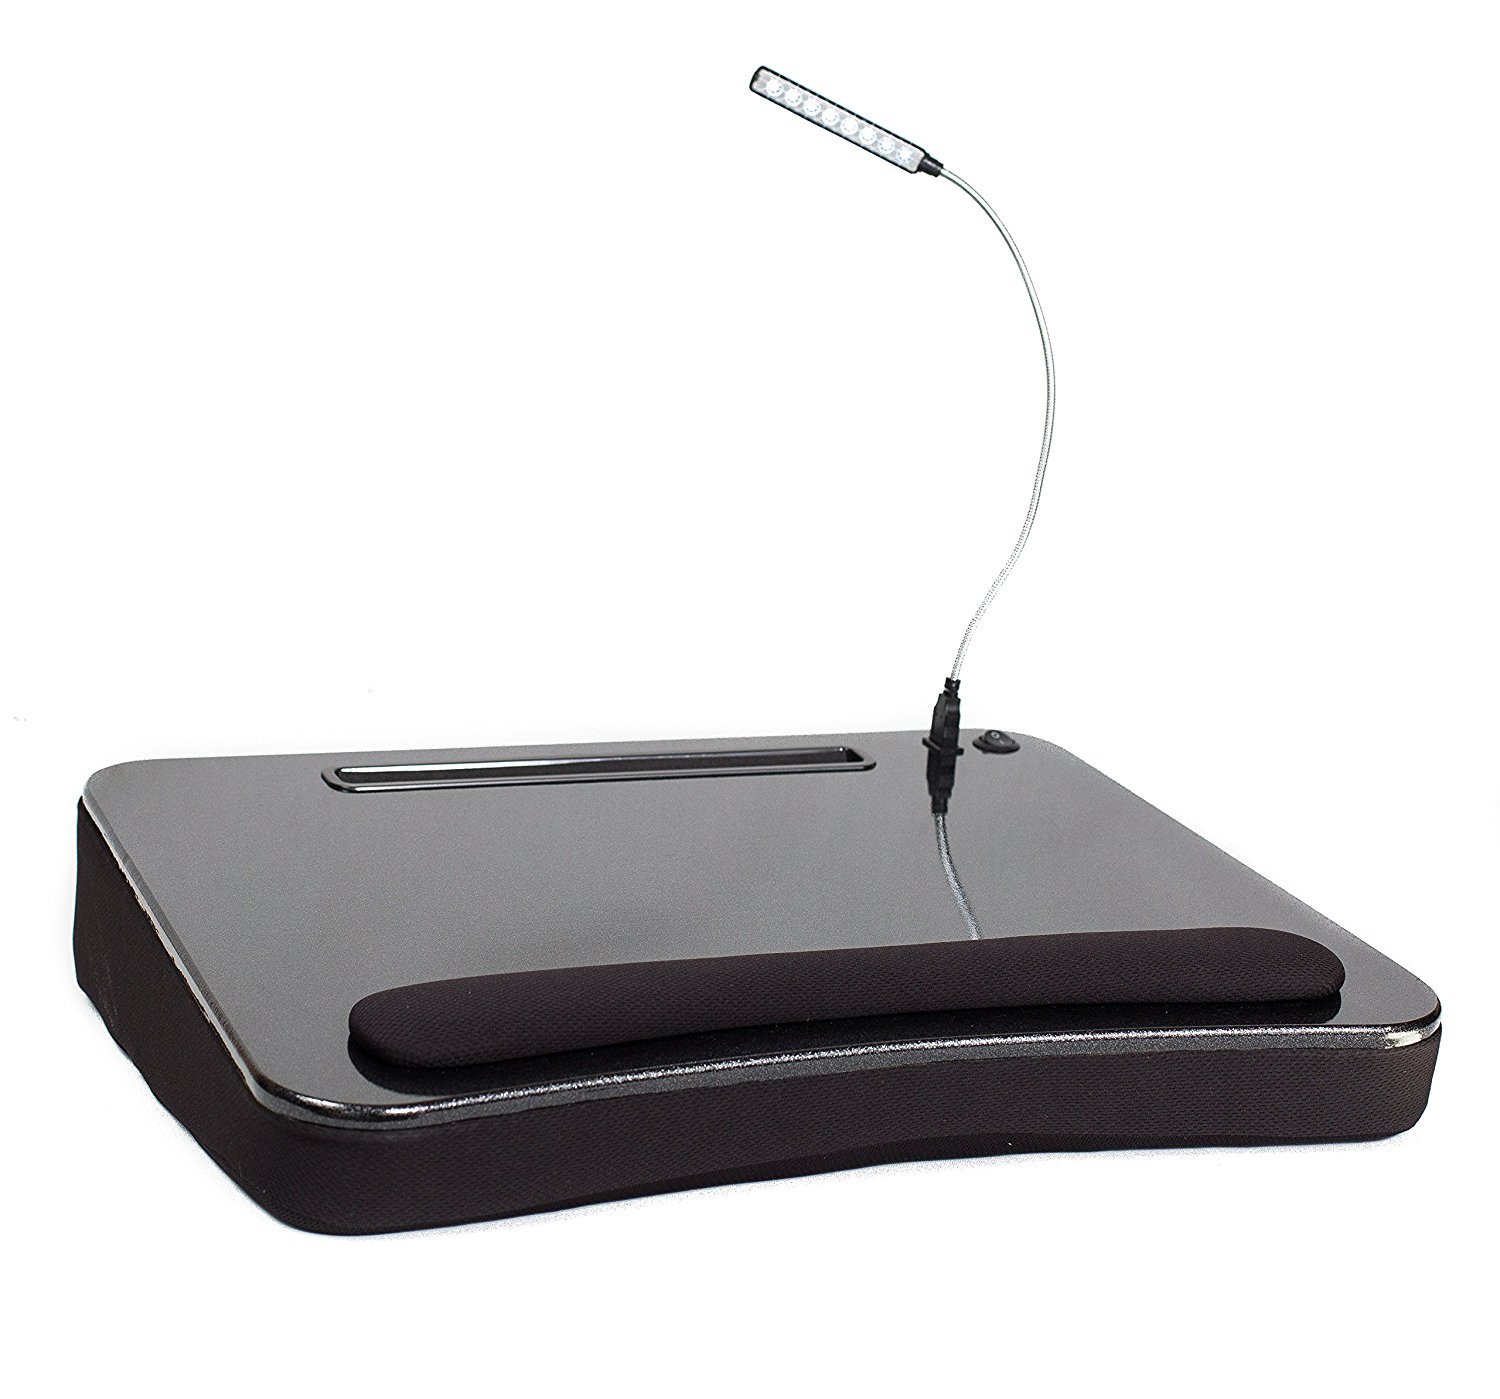 Sofia + Sam Lap Desk with USB Light and Tablet Slot - Black - image 4 of 7